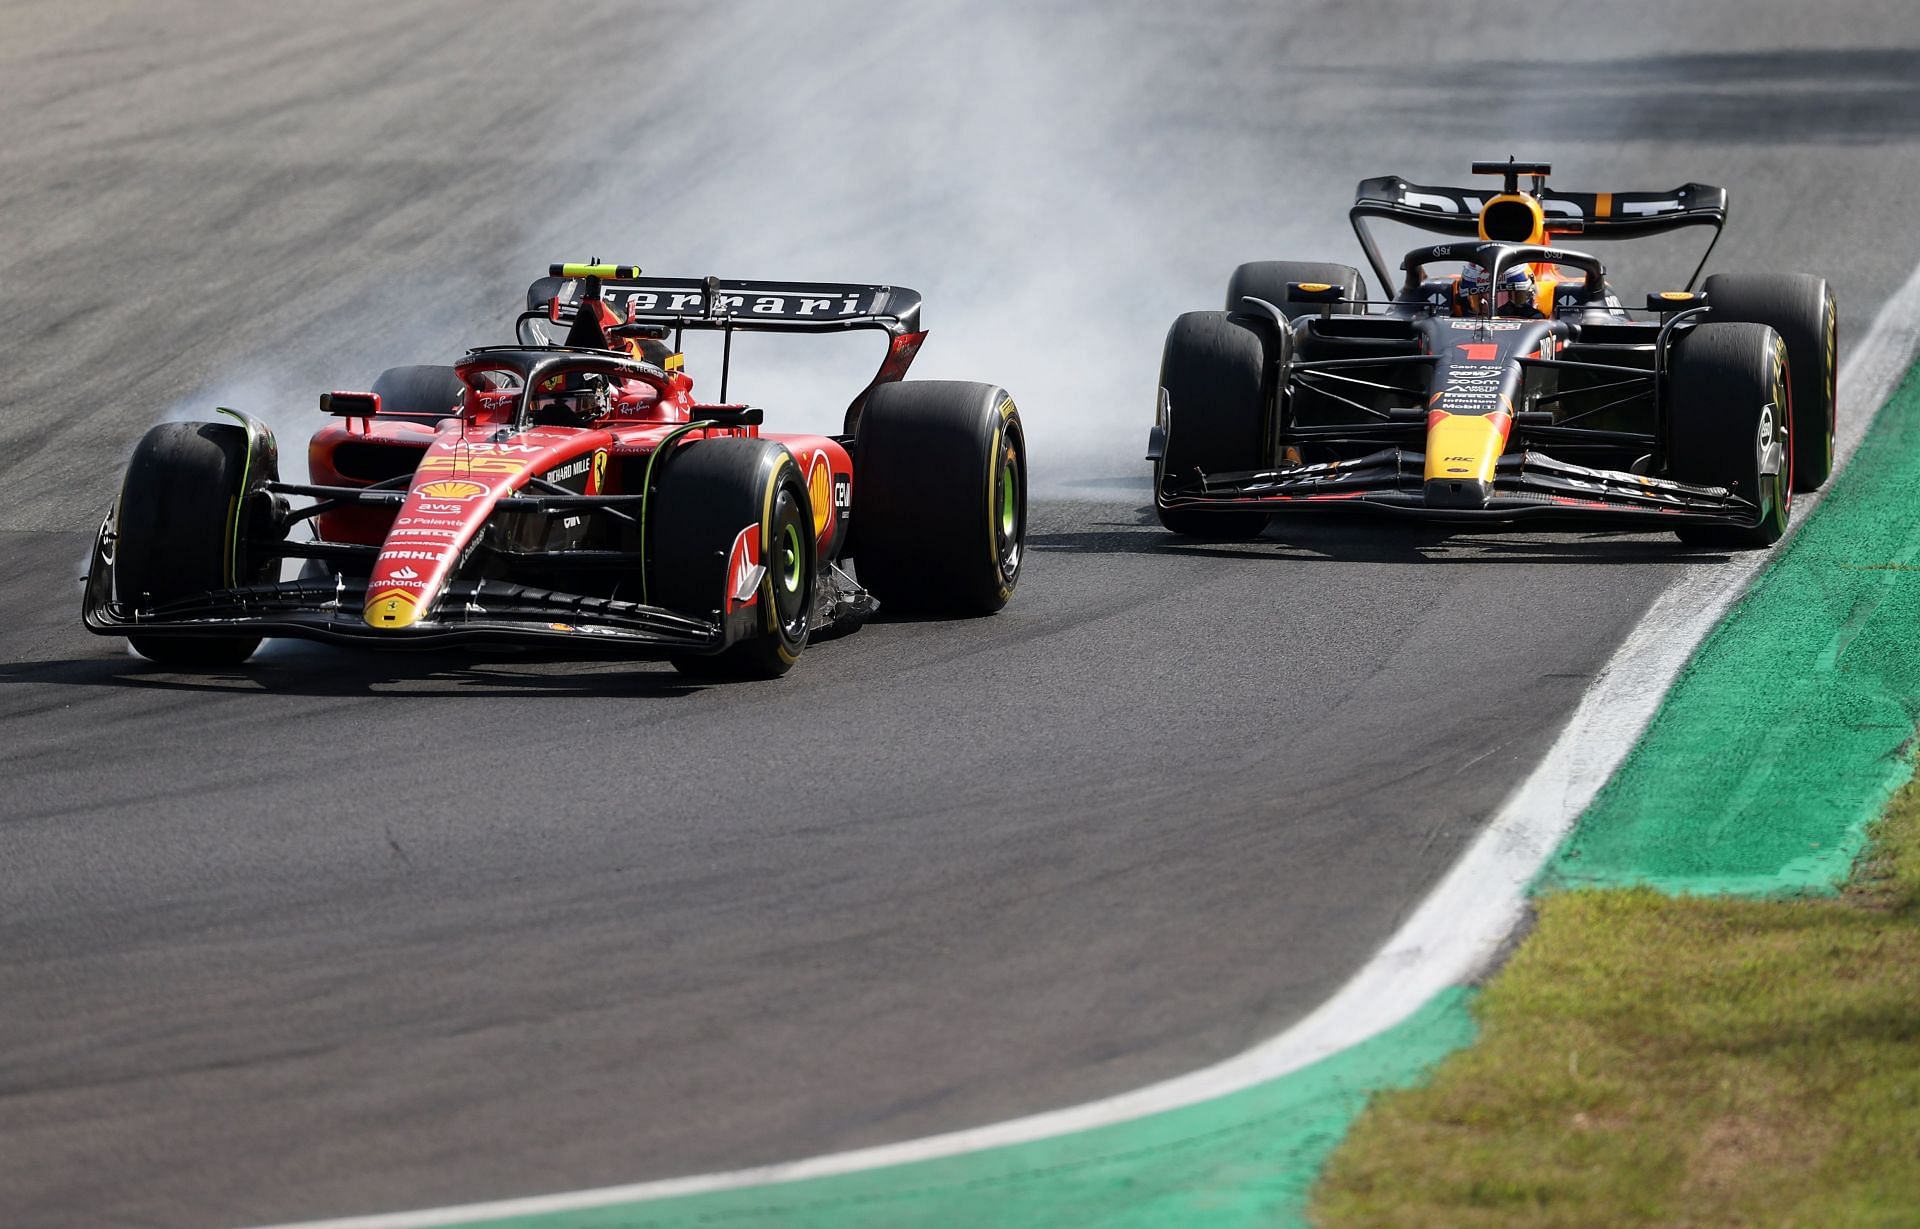 Carlos Sainz ahead of Max Verstappen